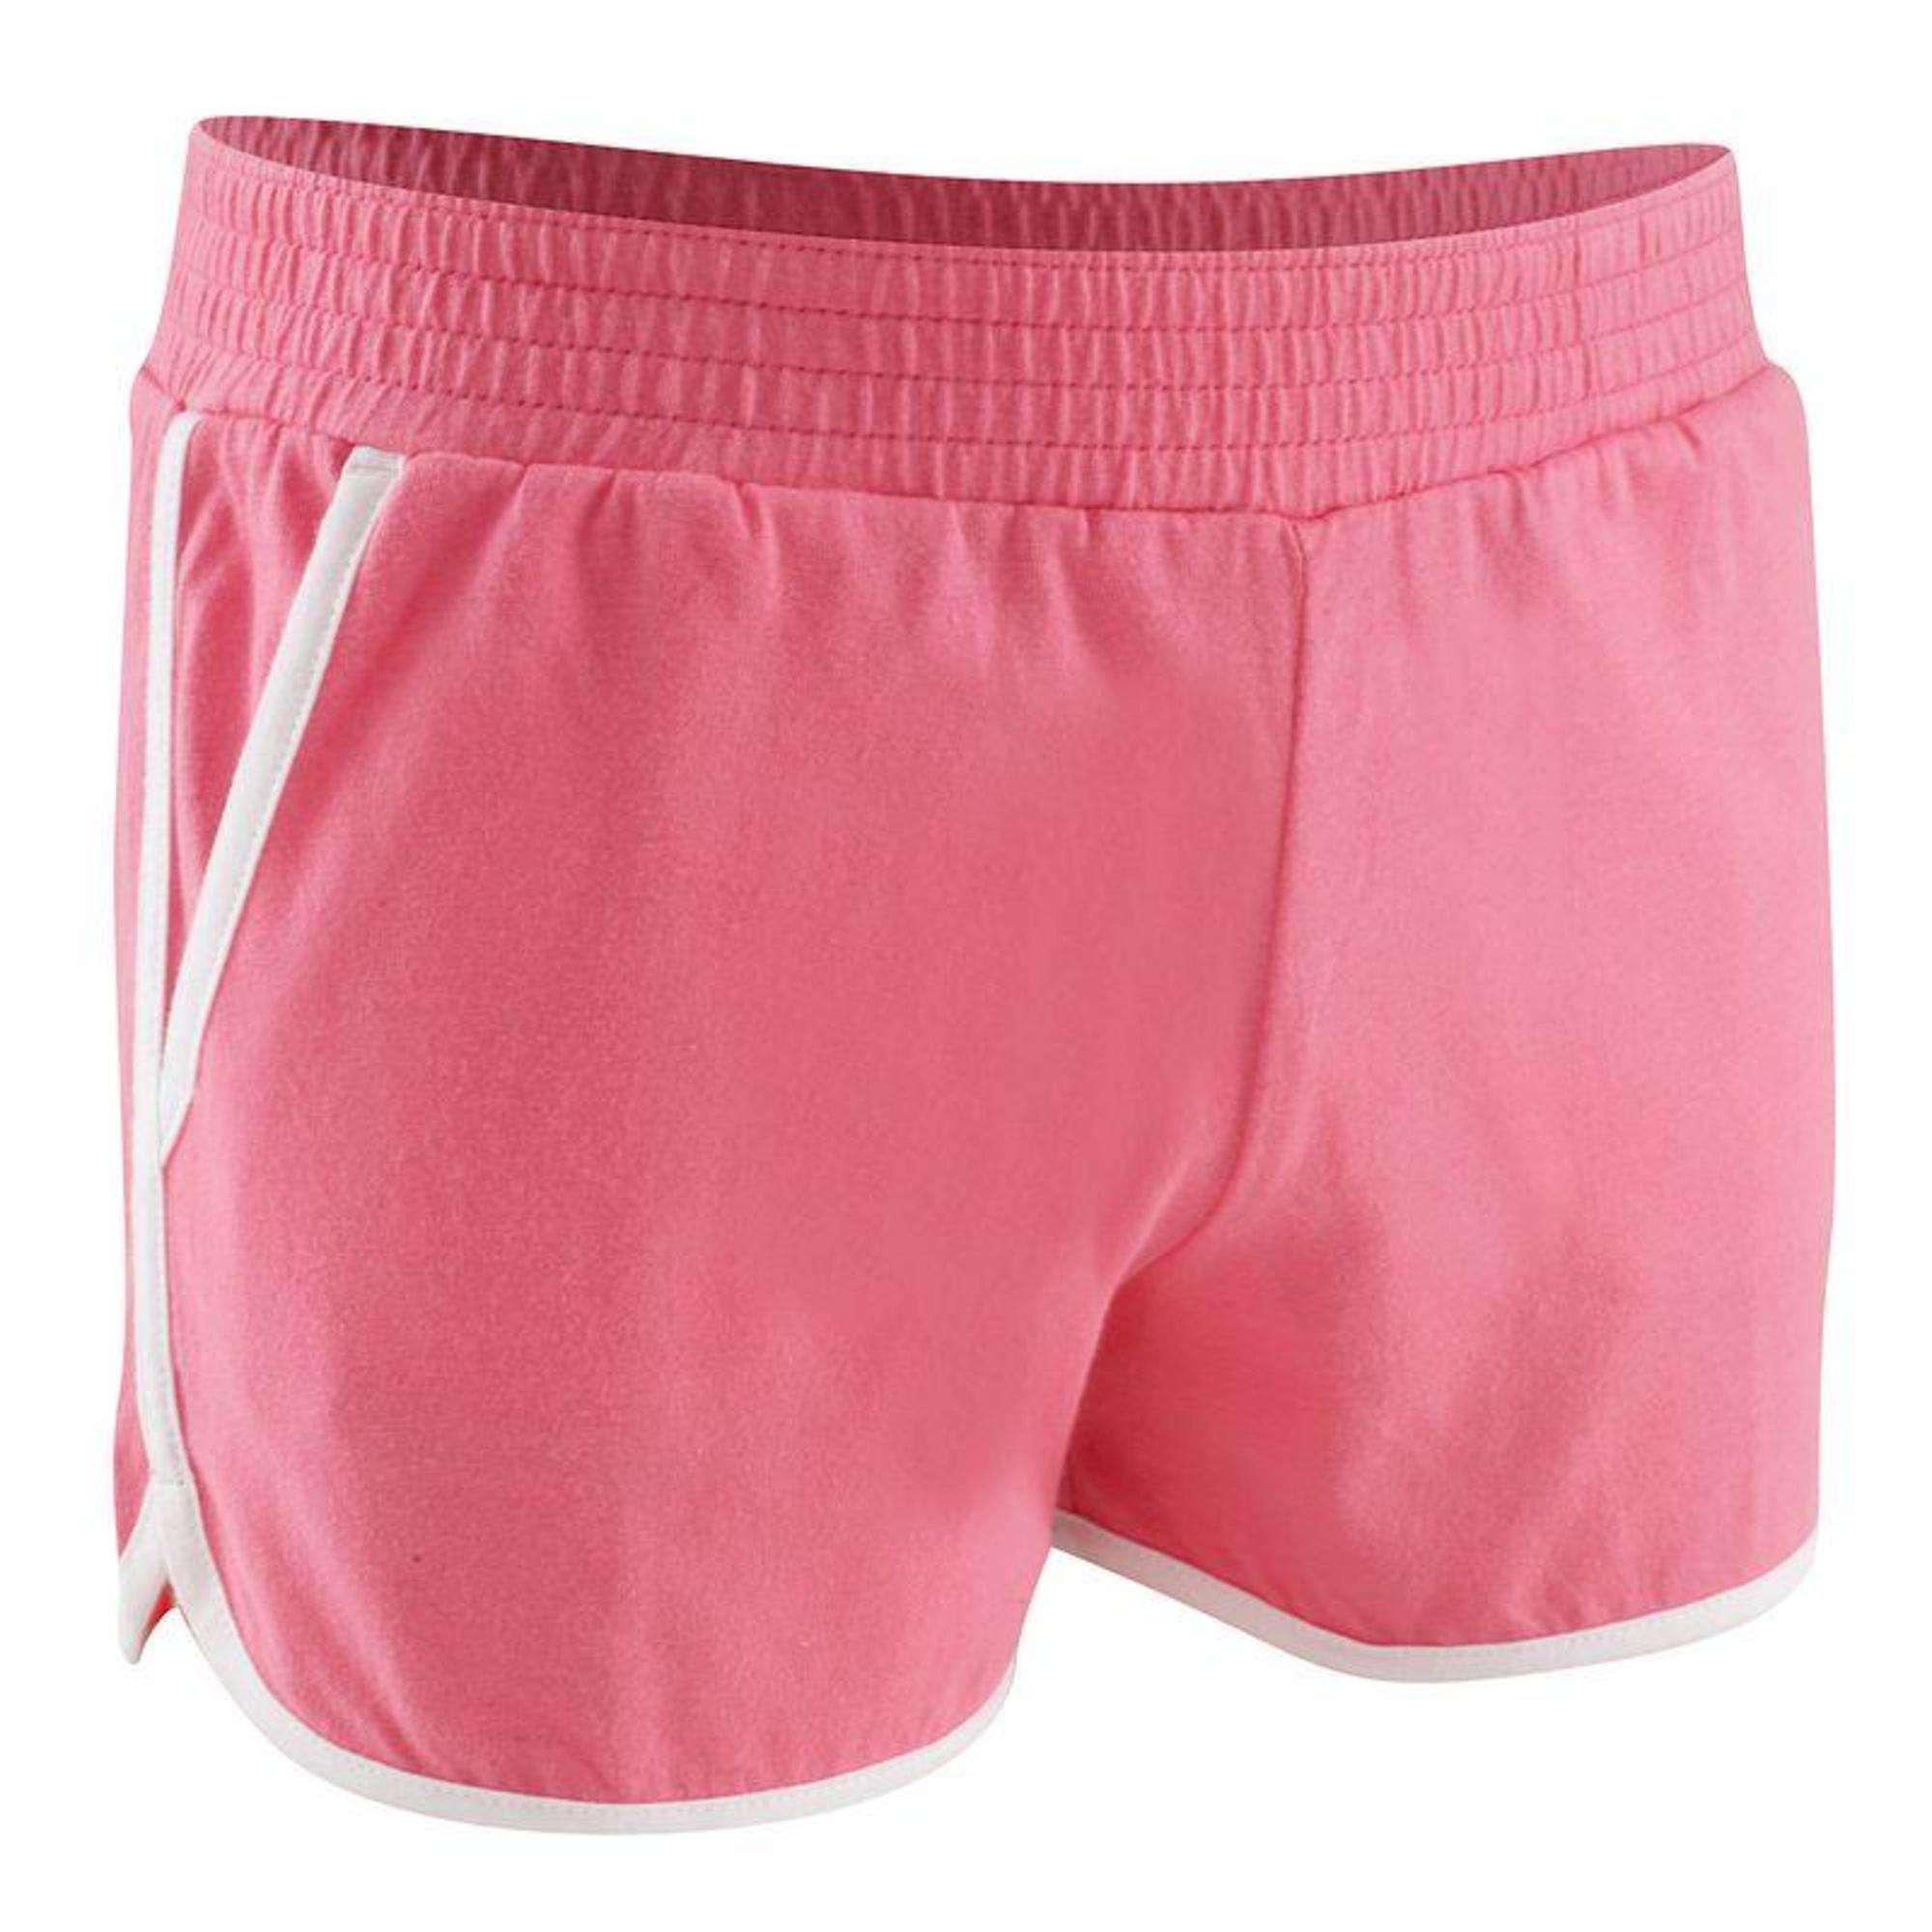 decathlon shorts for girls